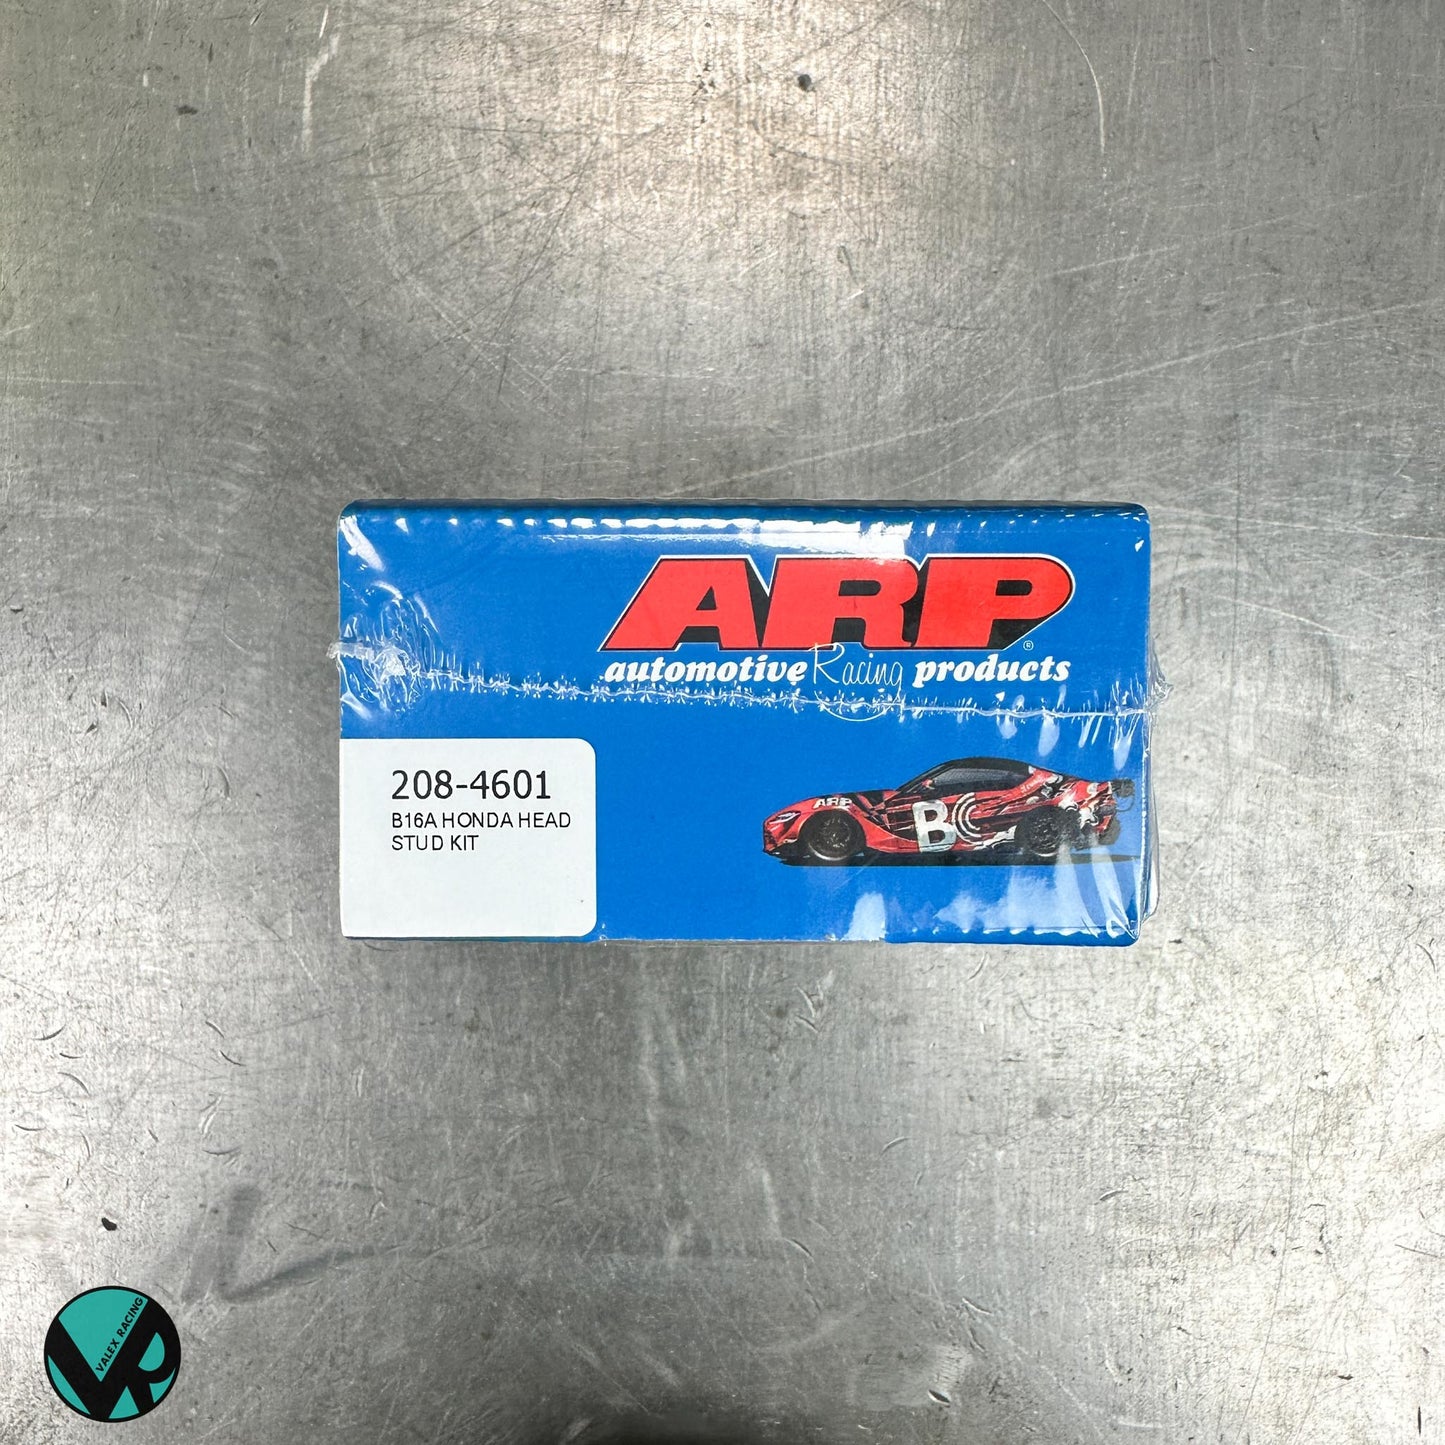 ARP Head Stud Kit Honda Civic Si B16 208-4601